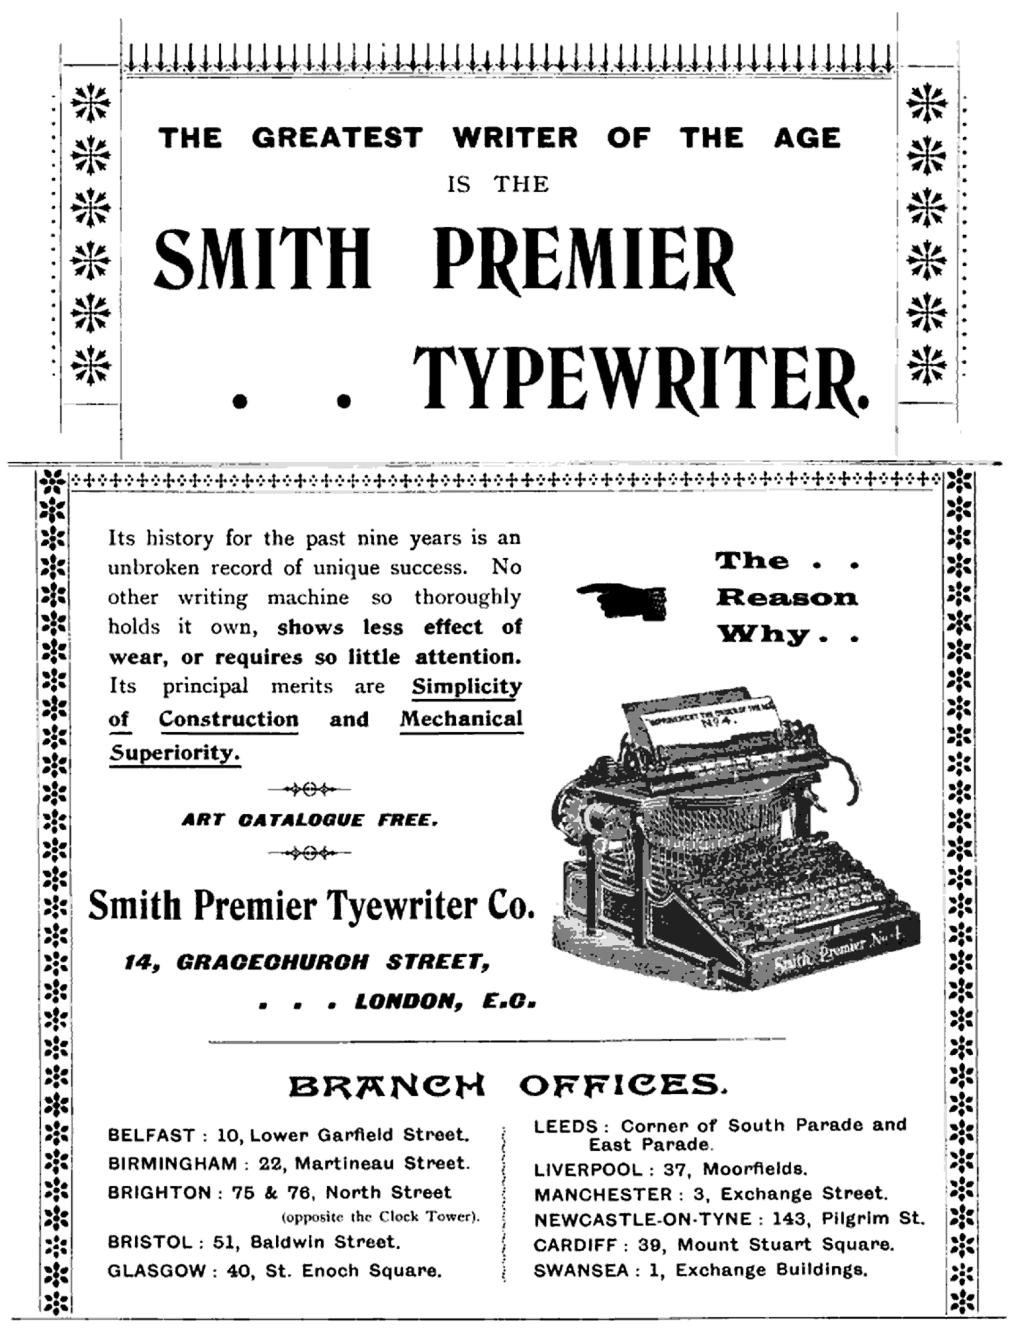 『Shorthand & Typewriting』1898年12月号、社名に誤植がある珍しい広告